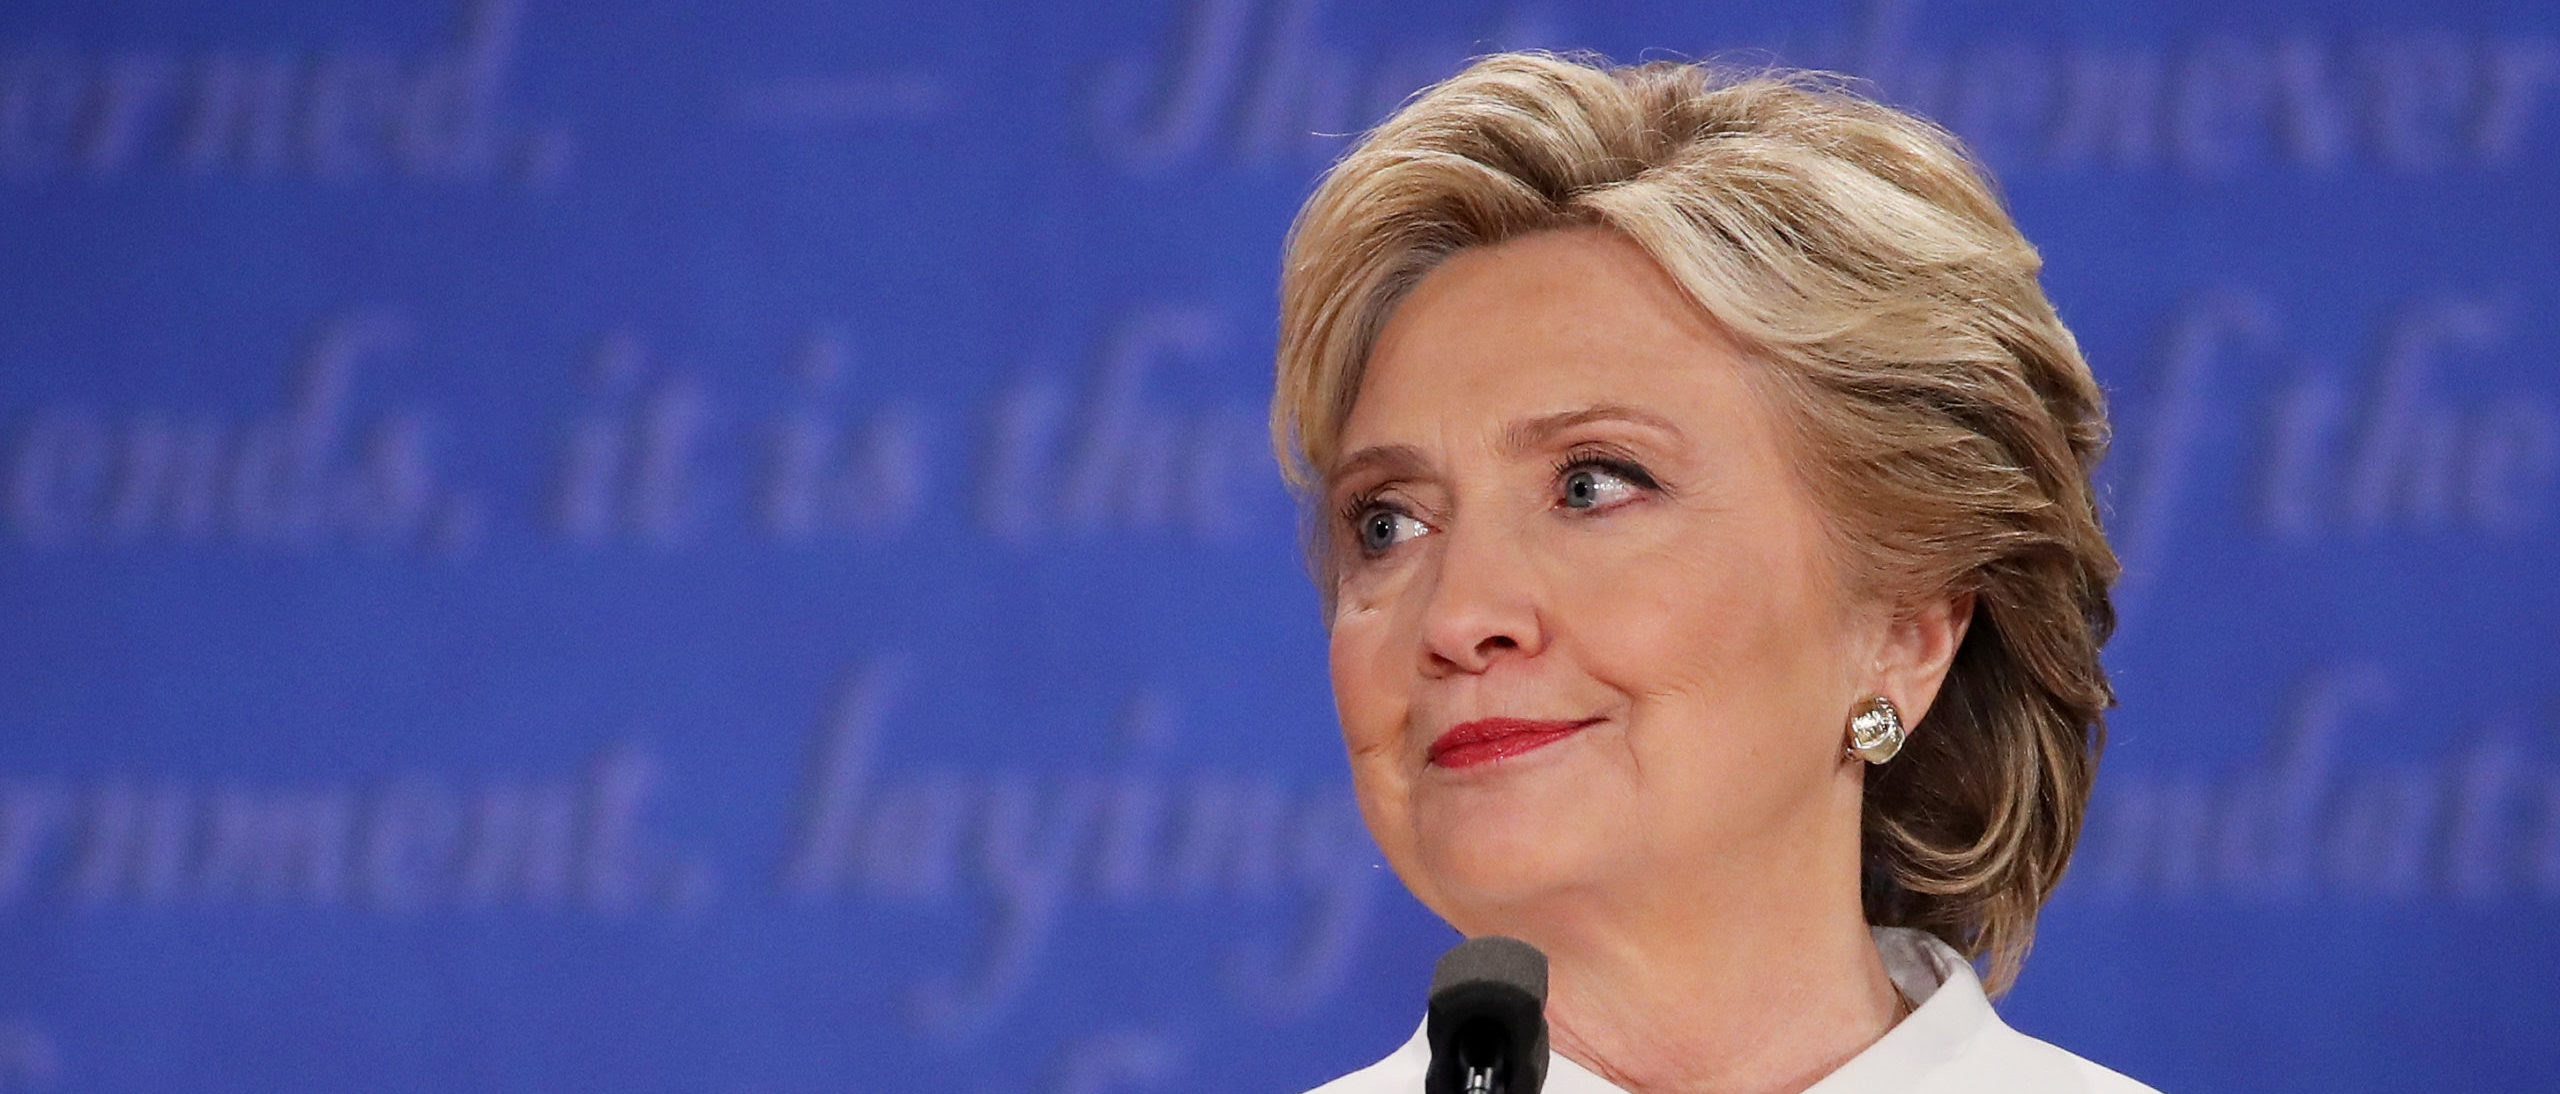 Hillary Clinton Returns To Politics With $2,900 Minimum Donation Fundraiser For Dem Senate Candidate